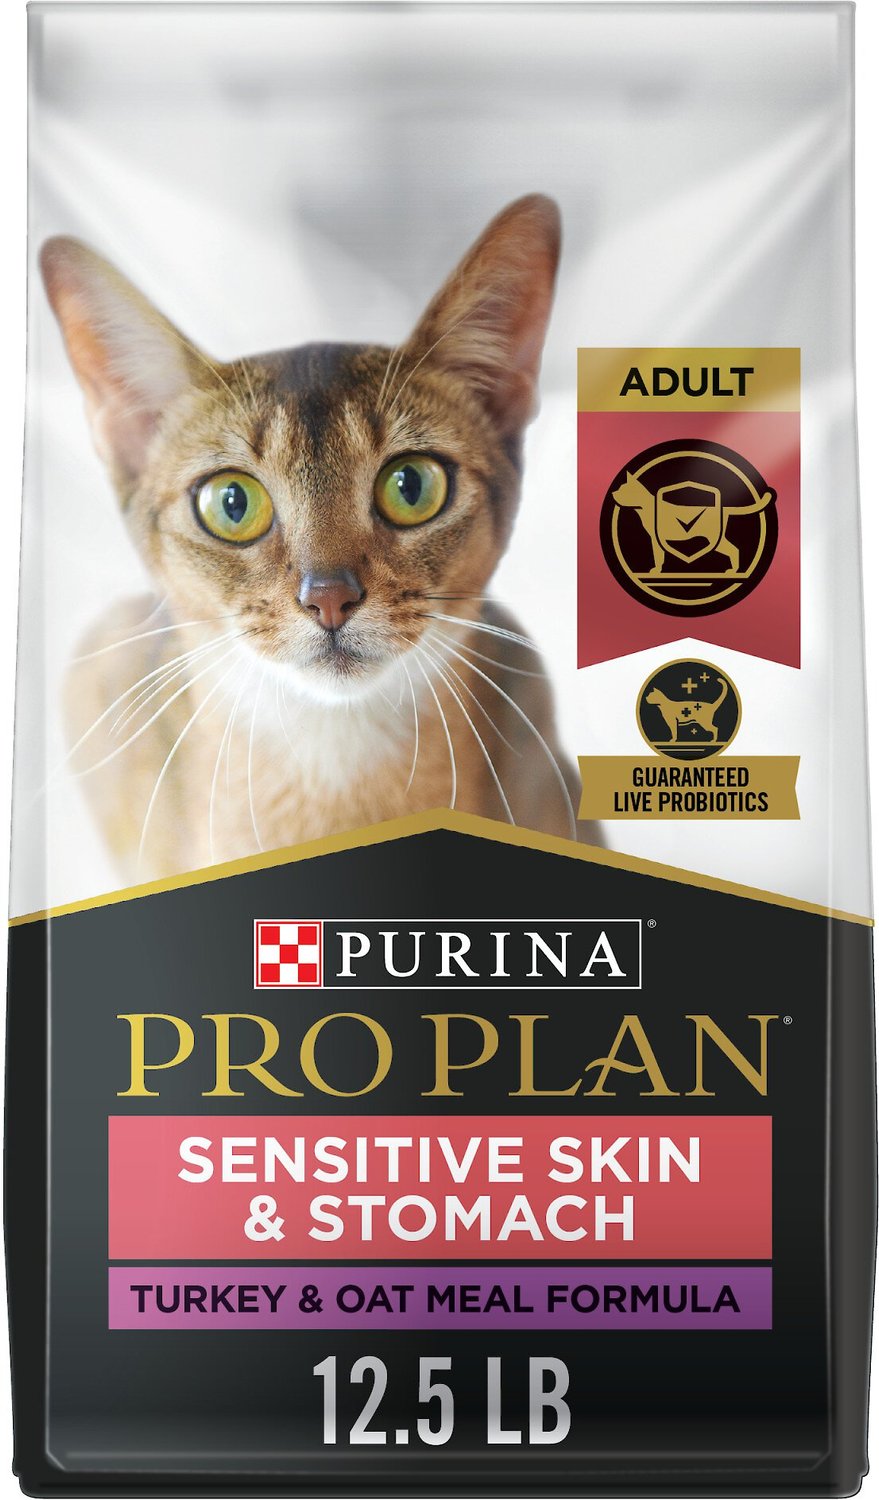 PURINA PRO PLAN Sensitive Skin & Stomach Turkey & Oat Meal Formula Dry